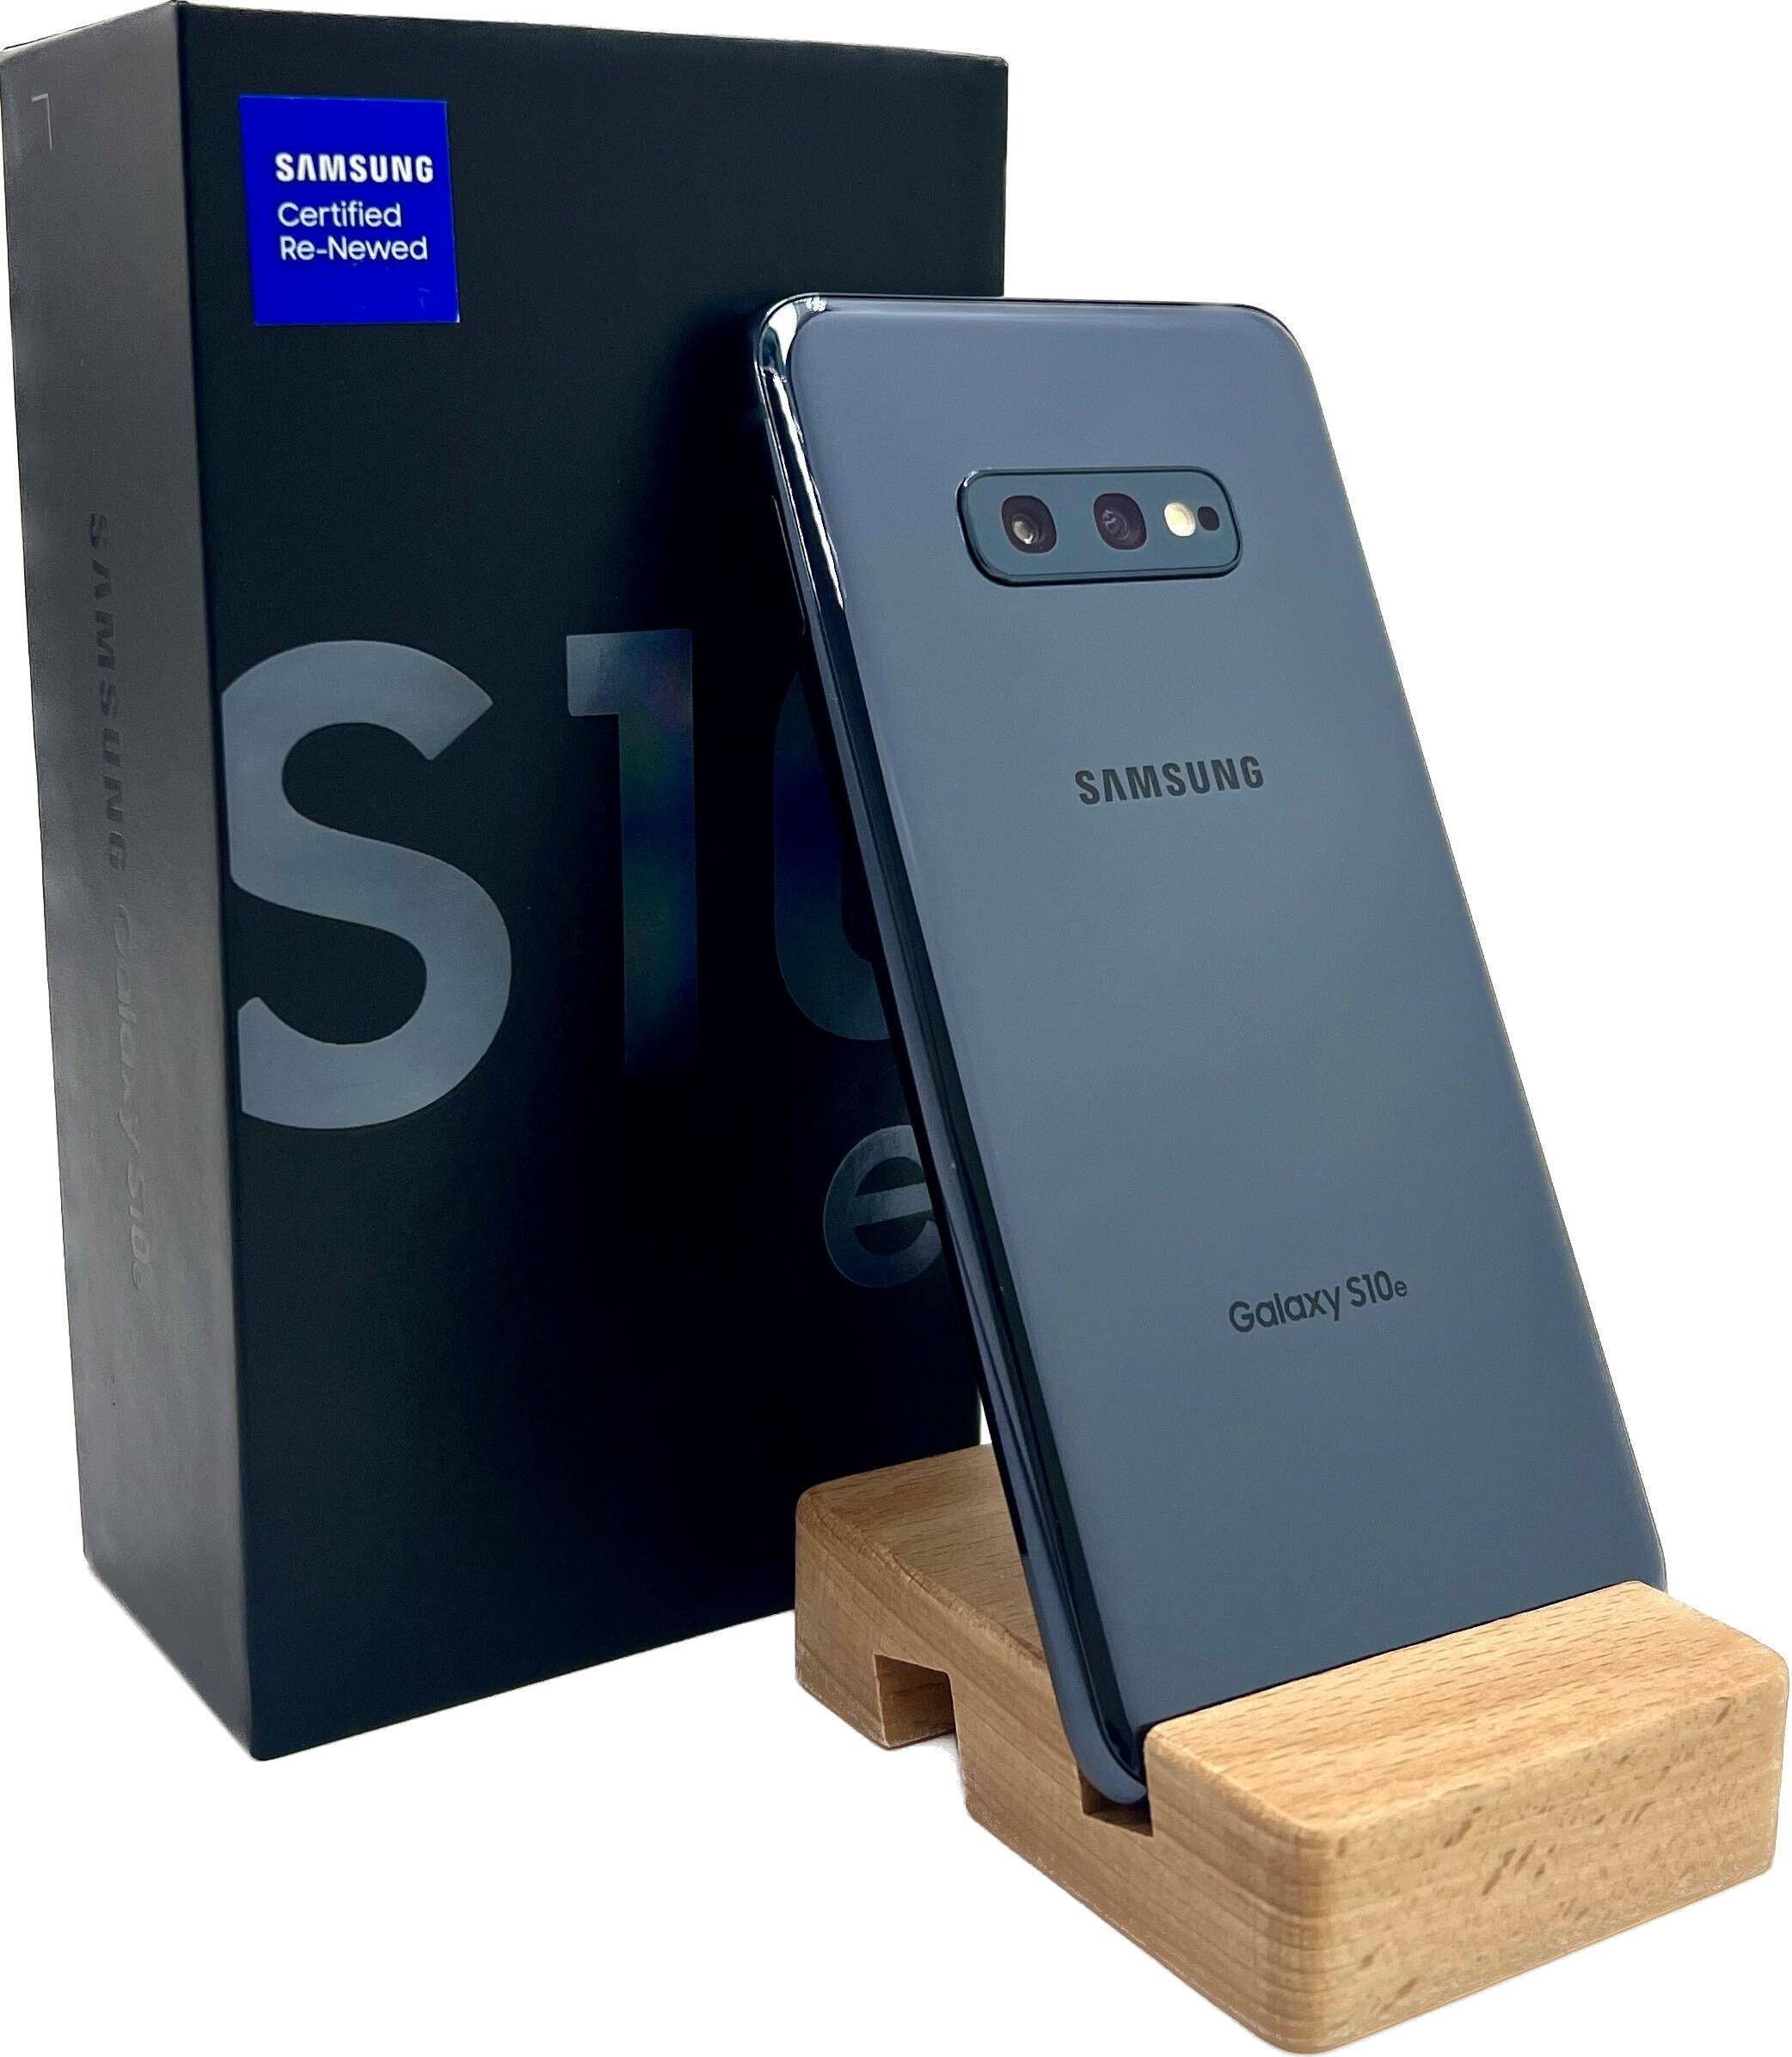 Samsung Galaxy S10e Certified Renewed (Unlocked)